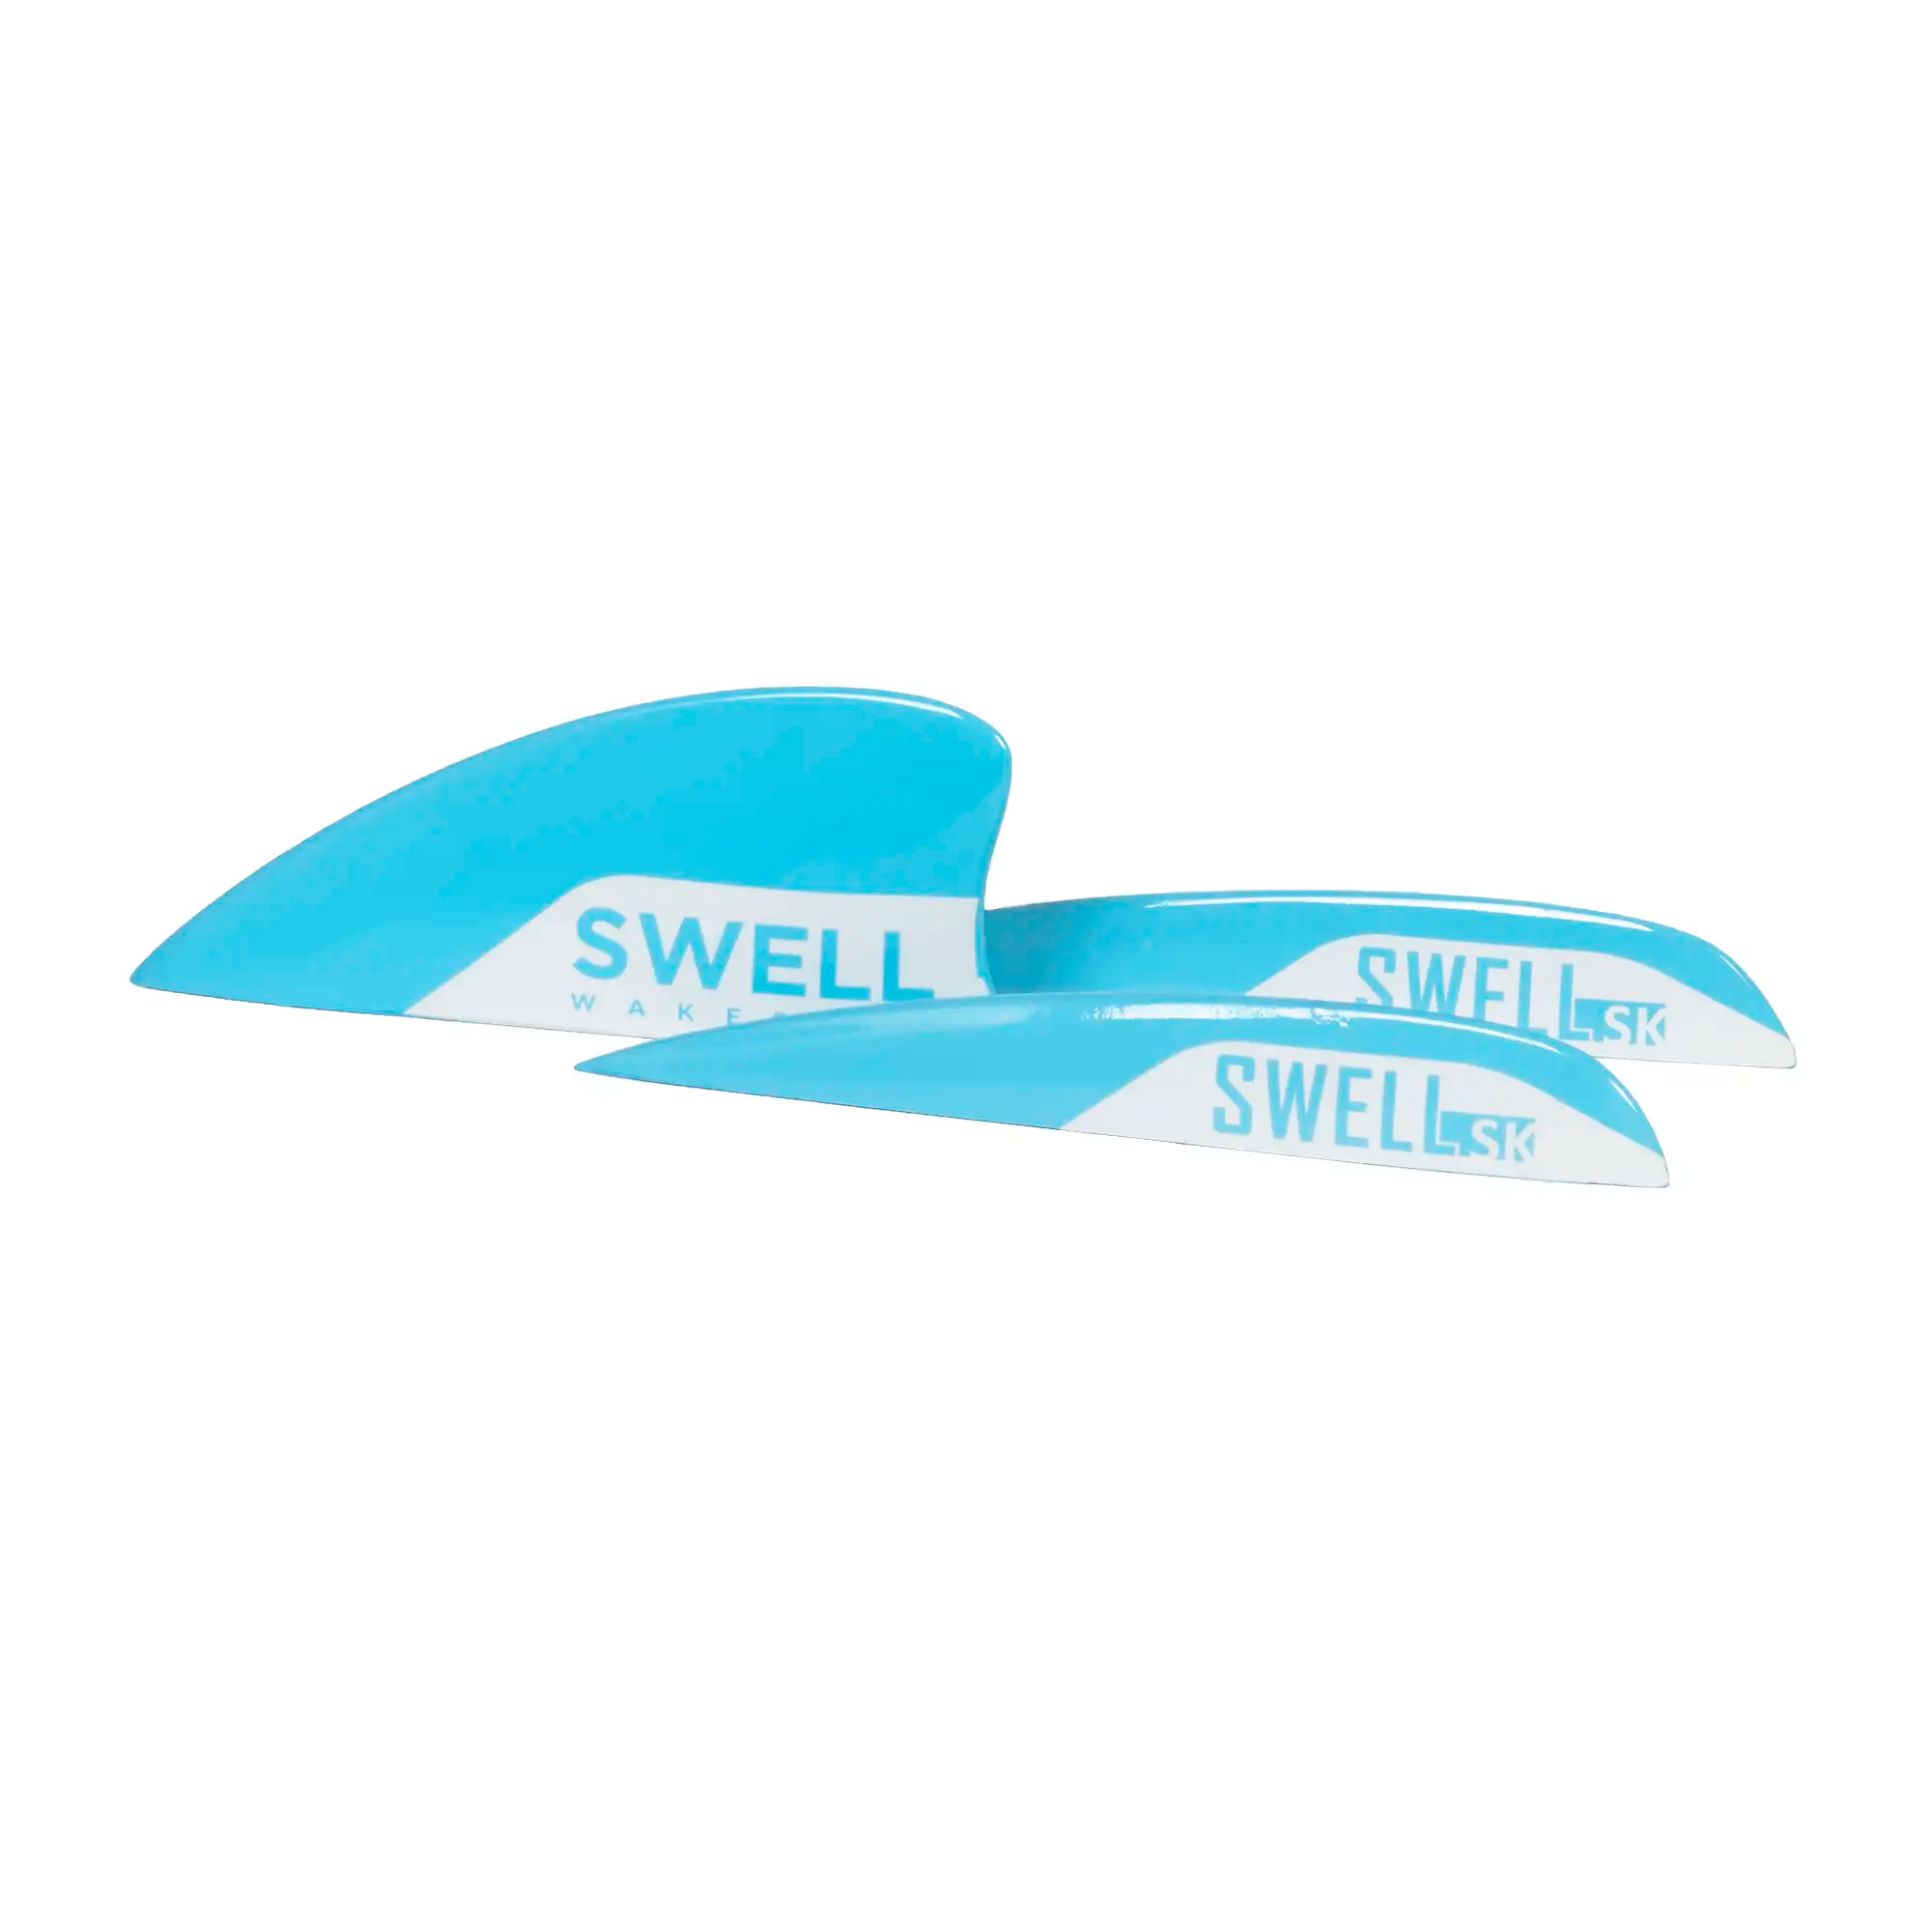 SWELL Wakesurf Fiberglass Fins - Vermillion Skim Fin Set